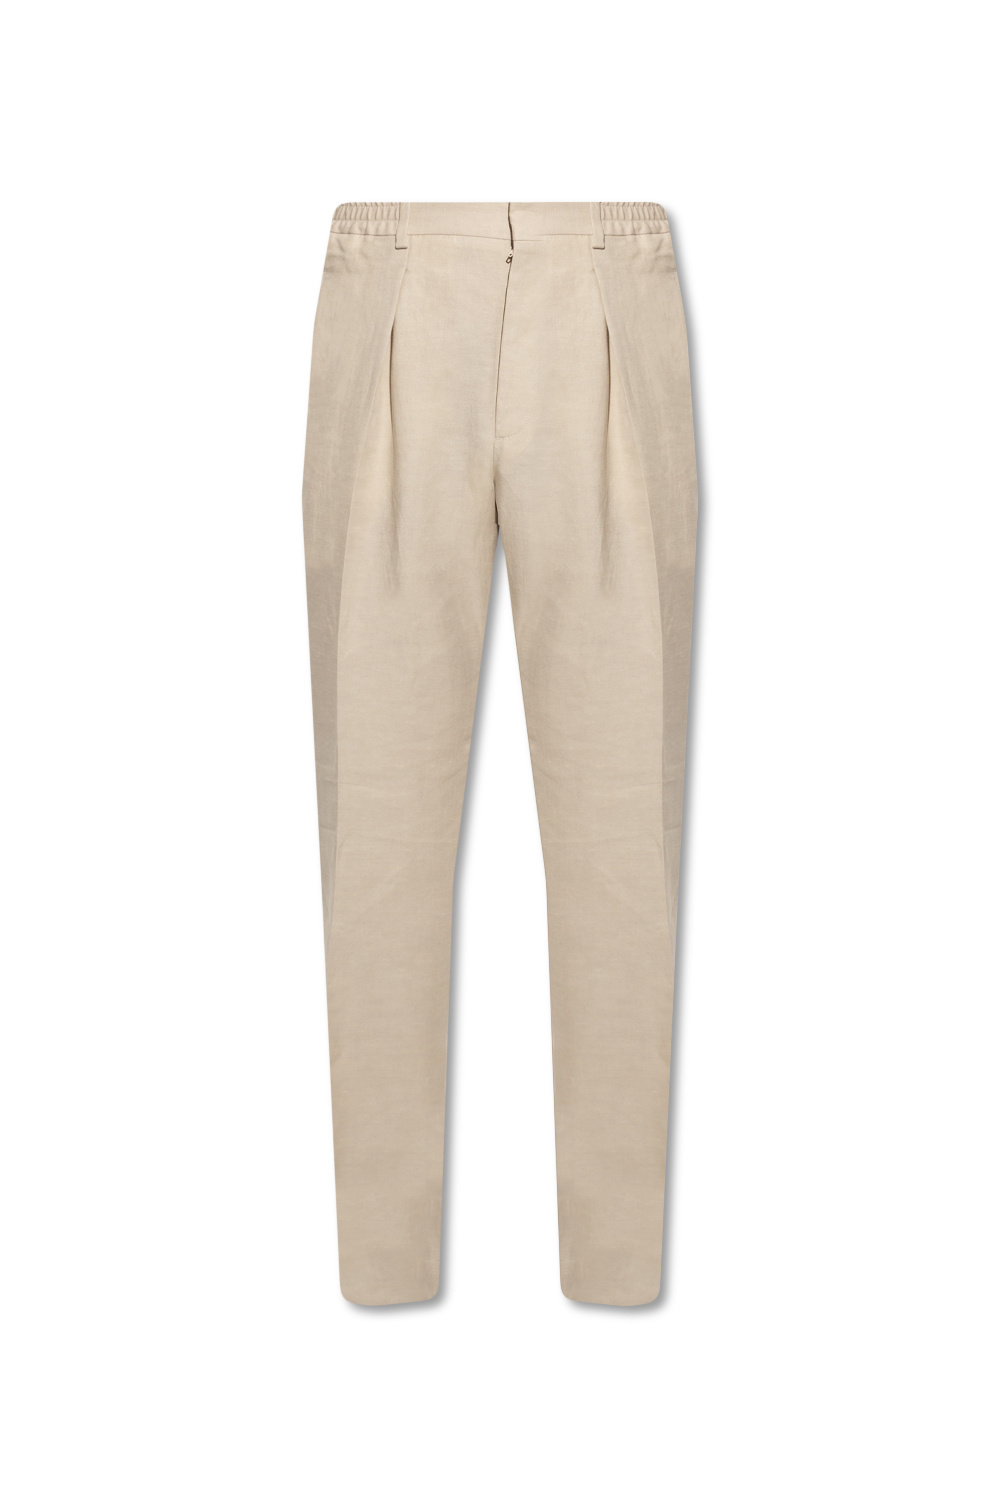 Fendi Pleat-front galah trousers